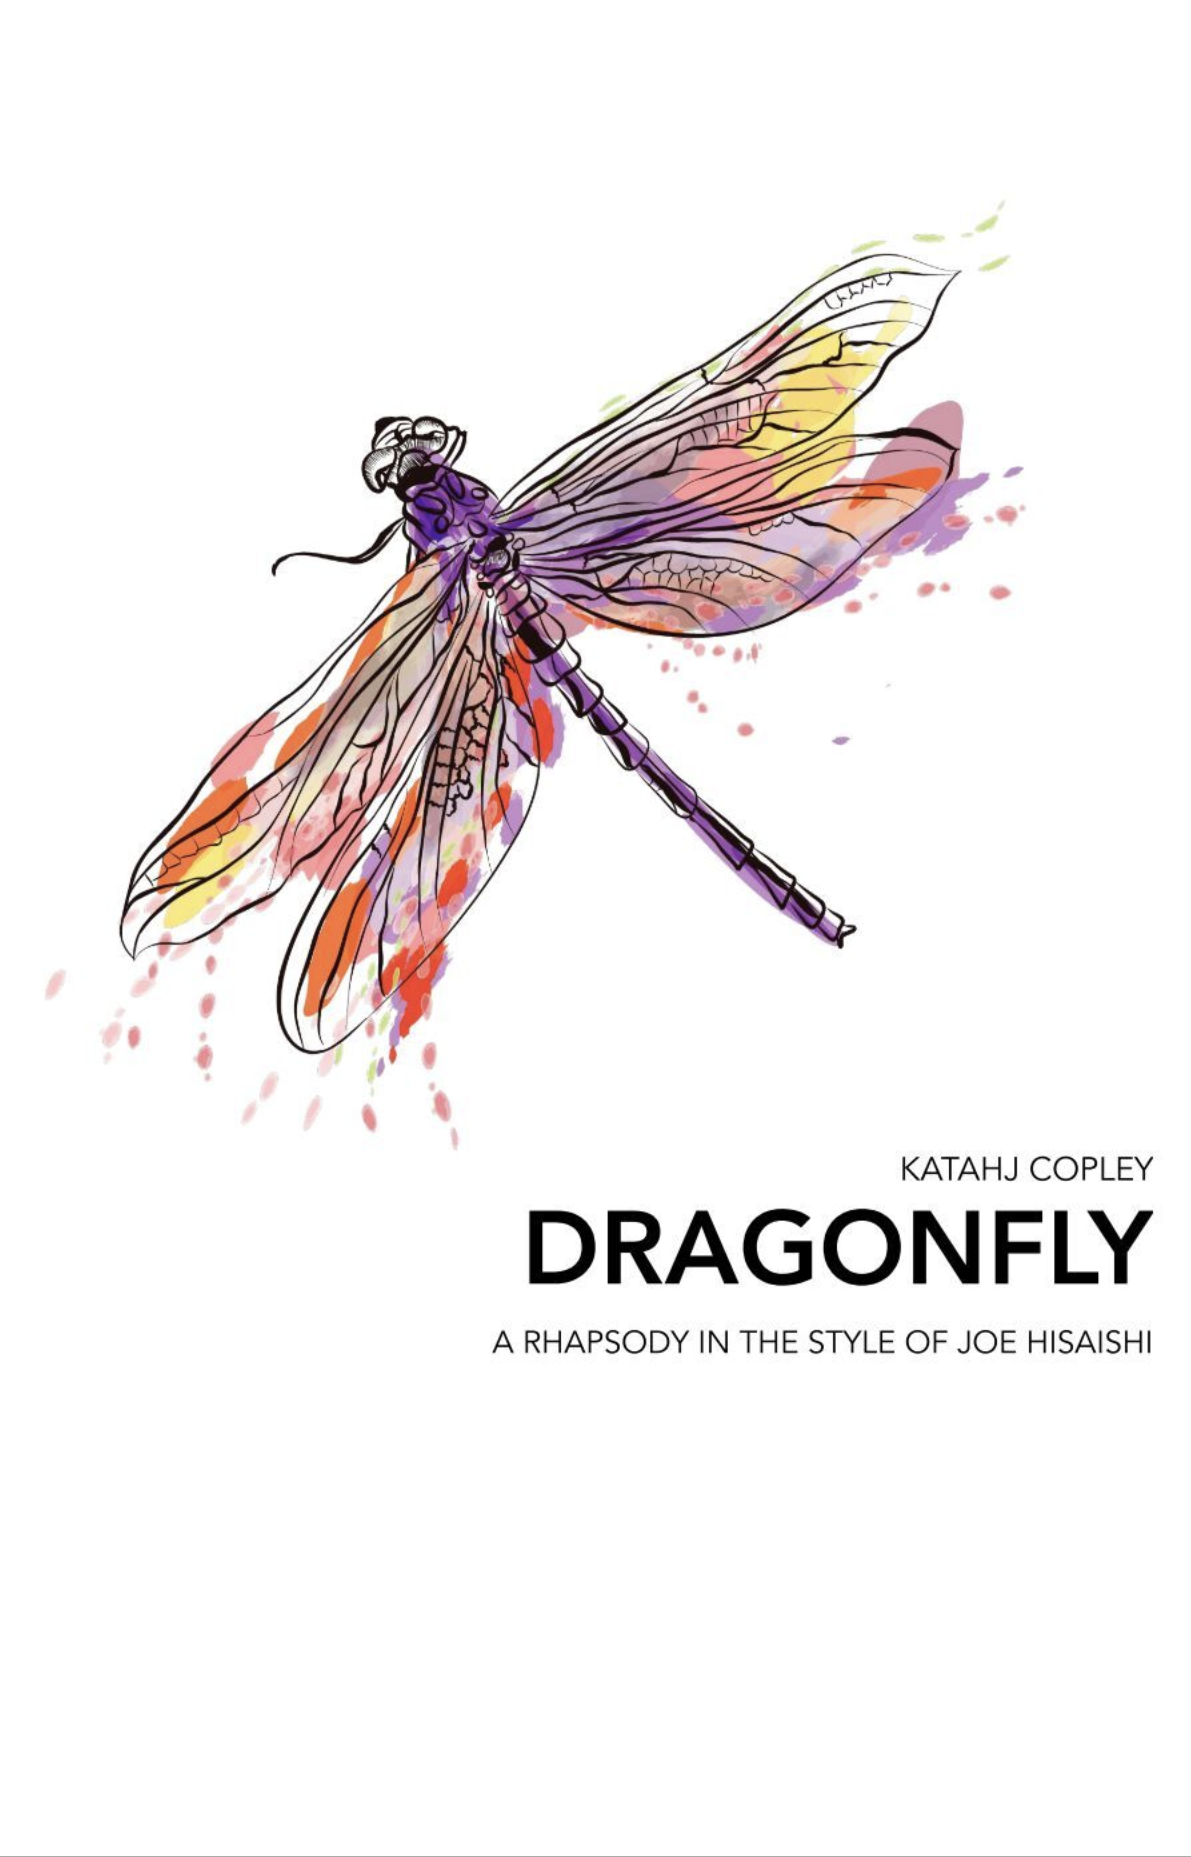 Dragonfly by Katahj Copley